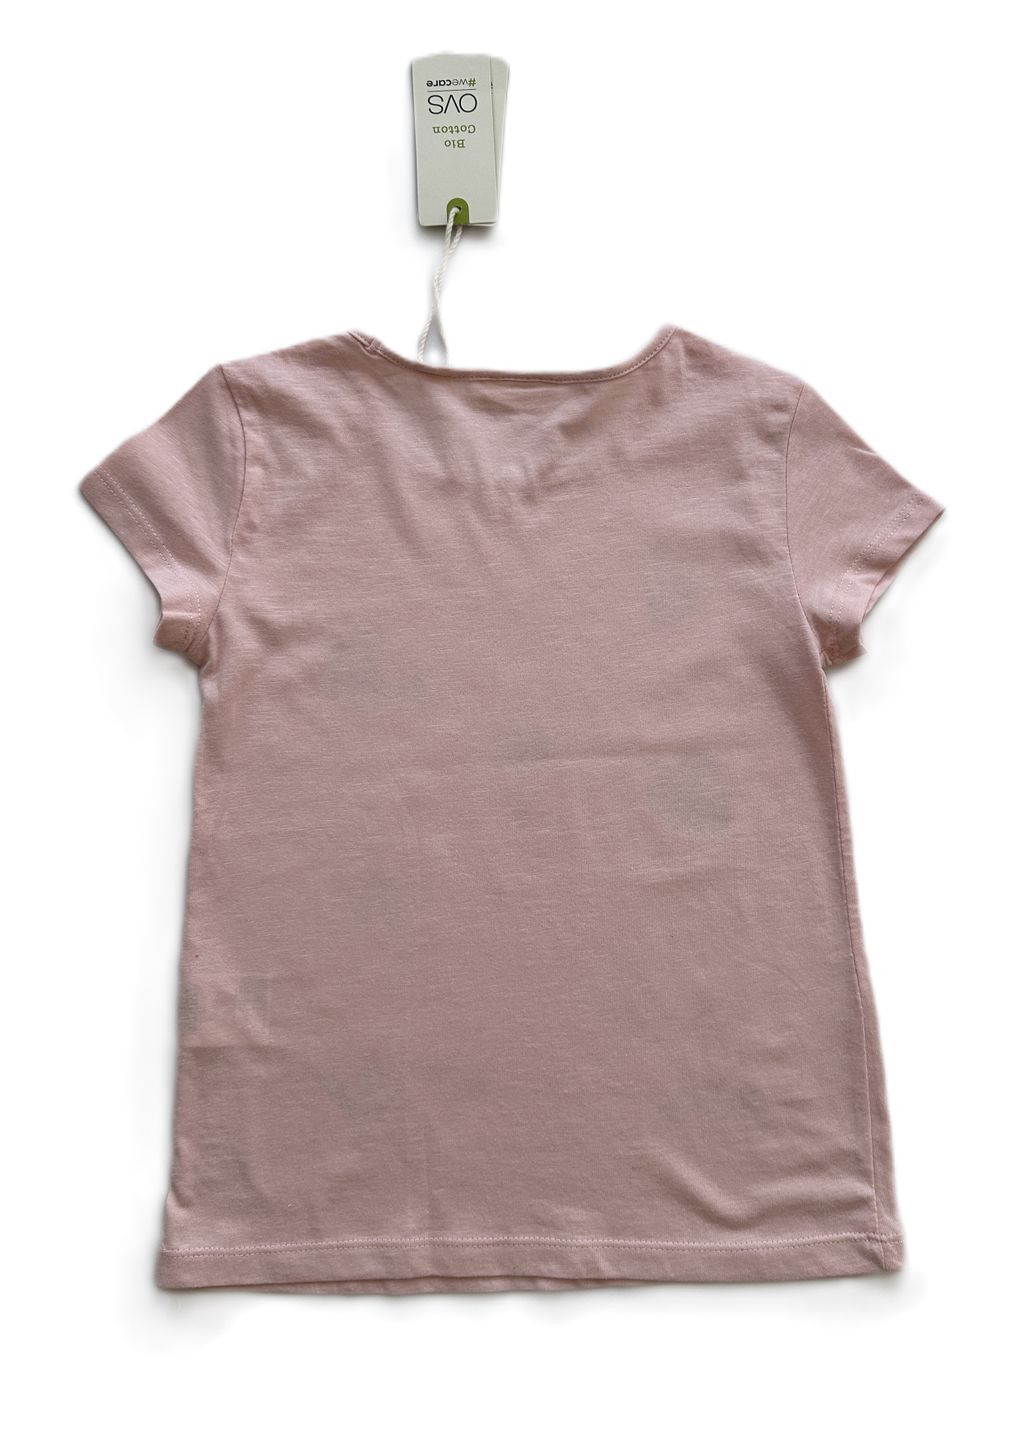 Пудровая летняя футболка для девочки 2000-26 пудровая (122 см) OVS